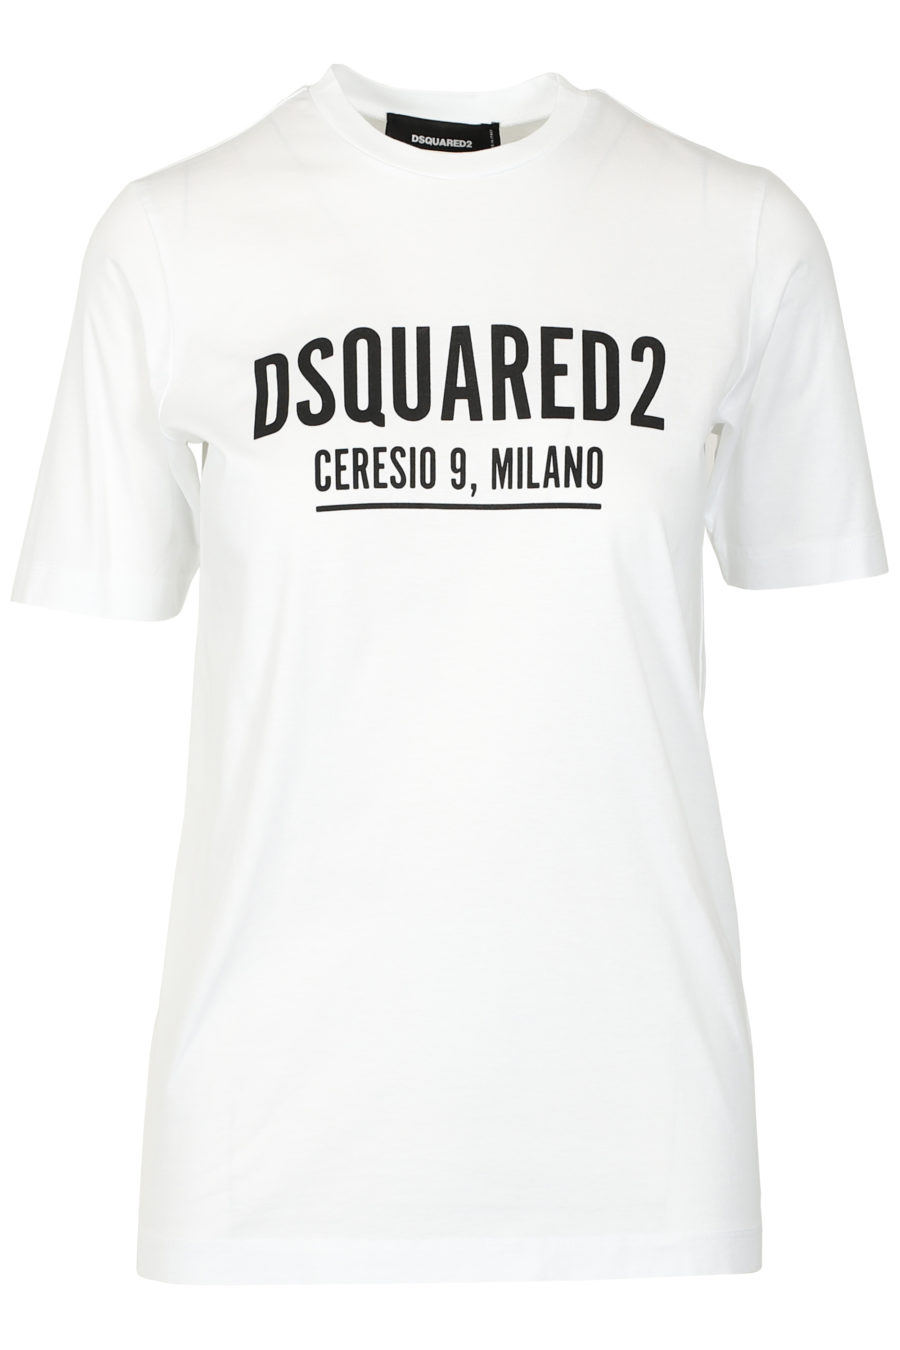 Camiseta de manga corta blanca "Ceresio Milano" - IMG 3274